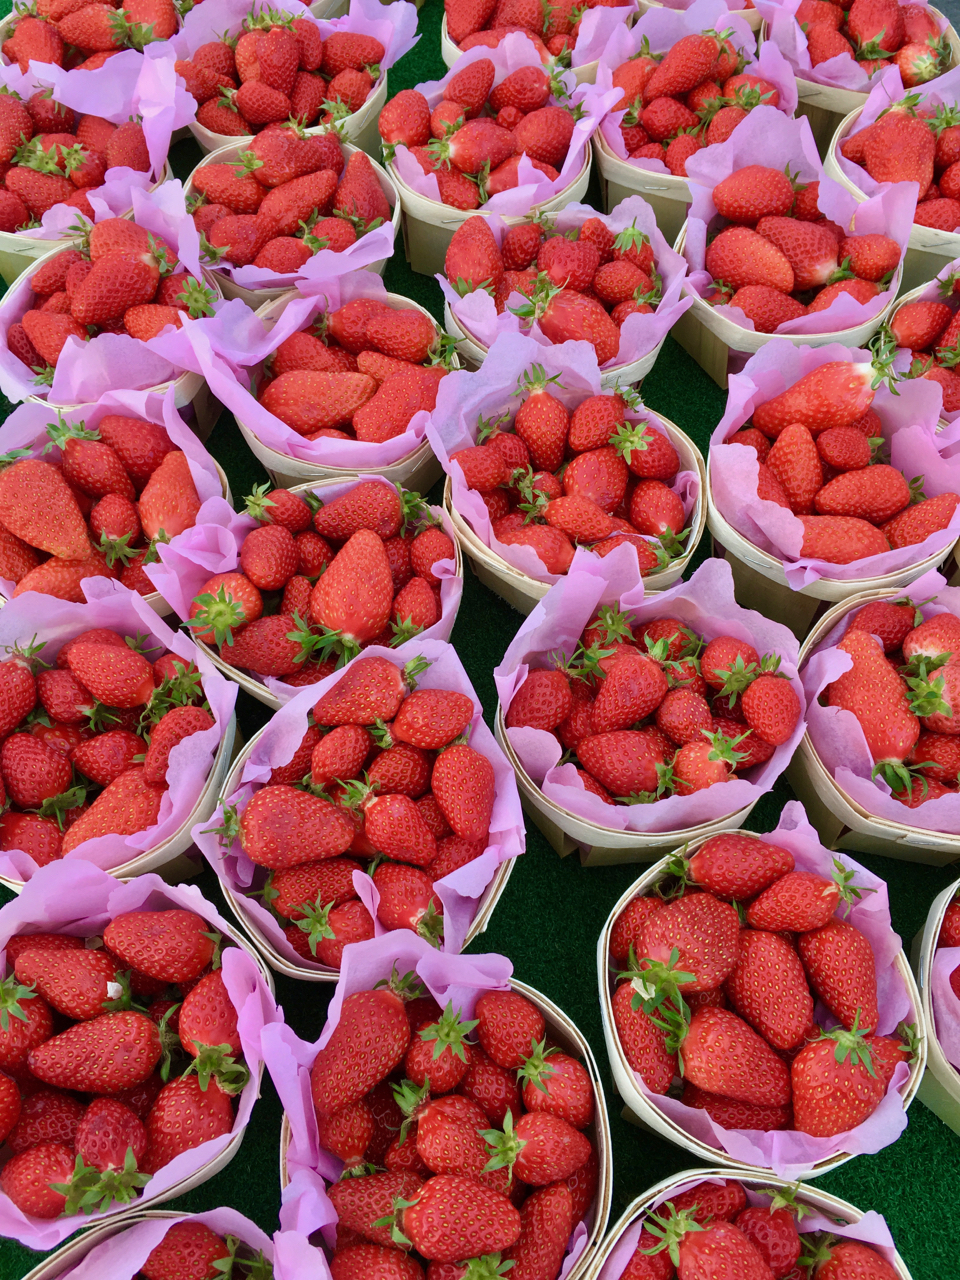 Strawberries in the Lourmarin market